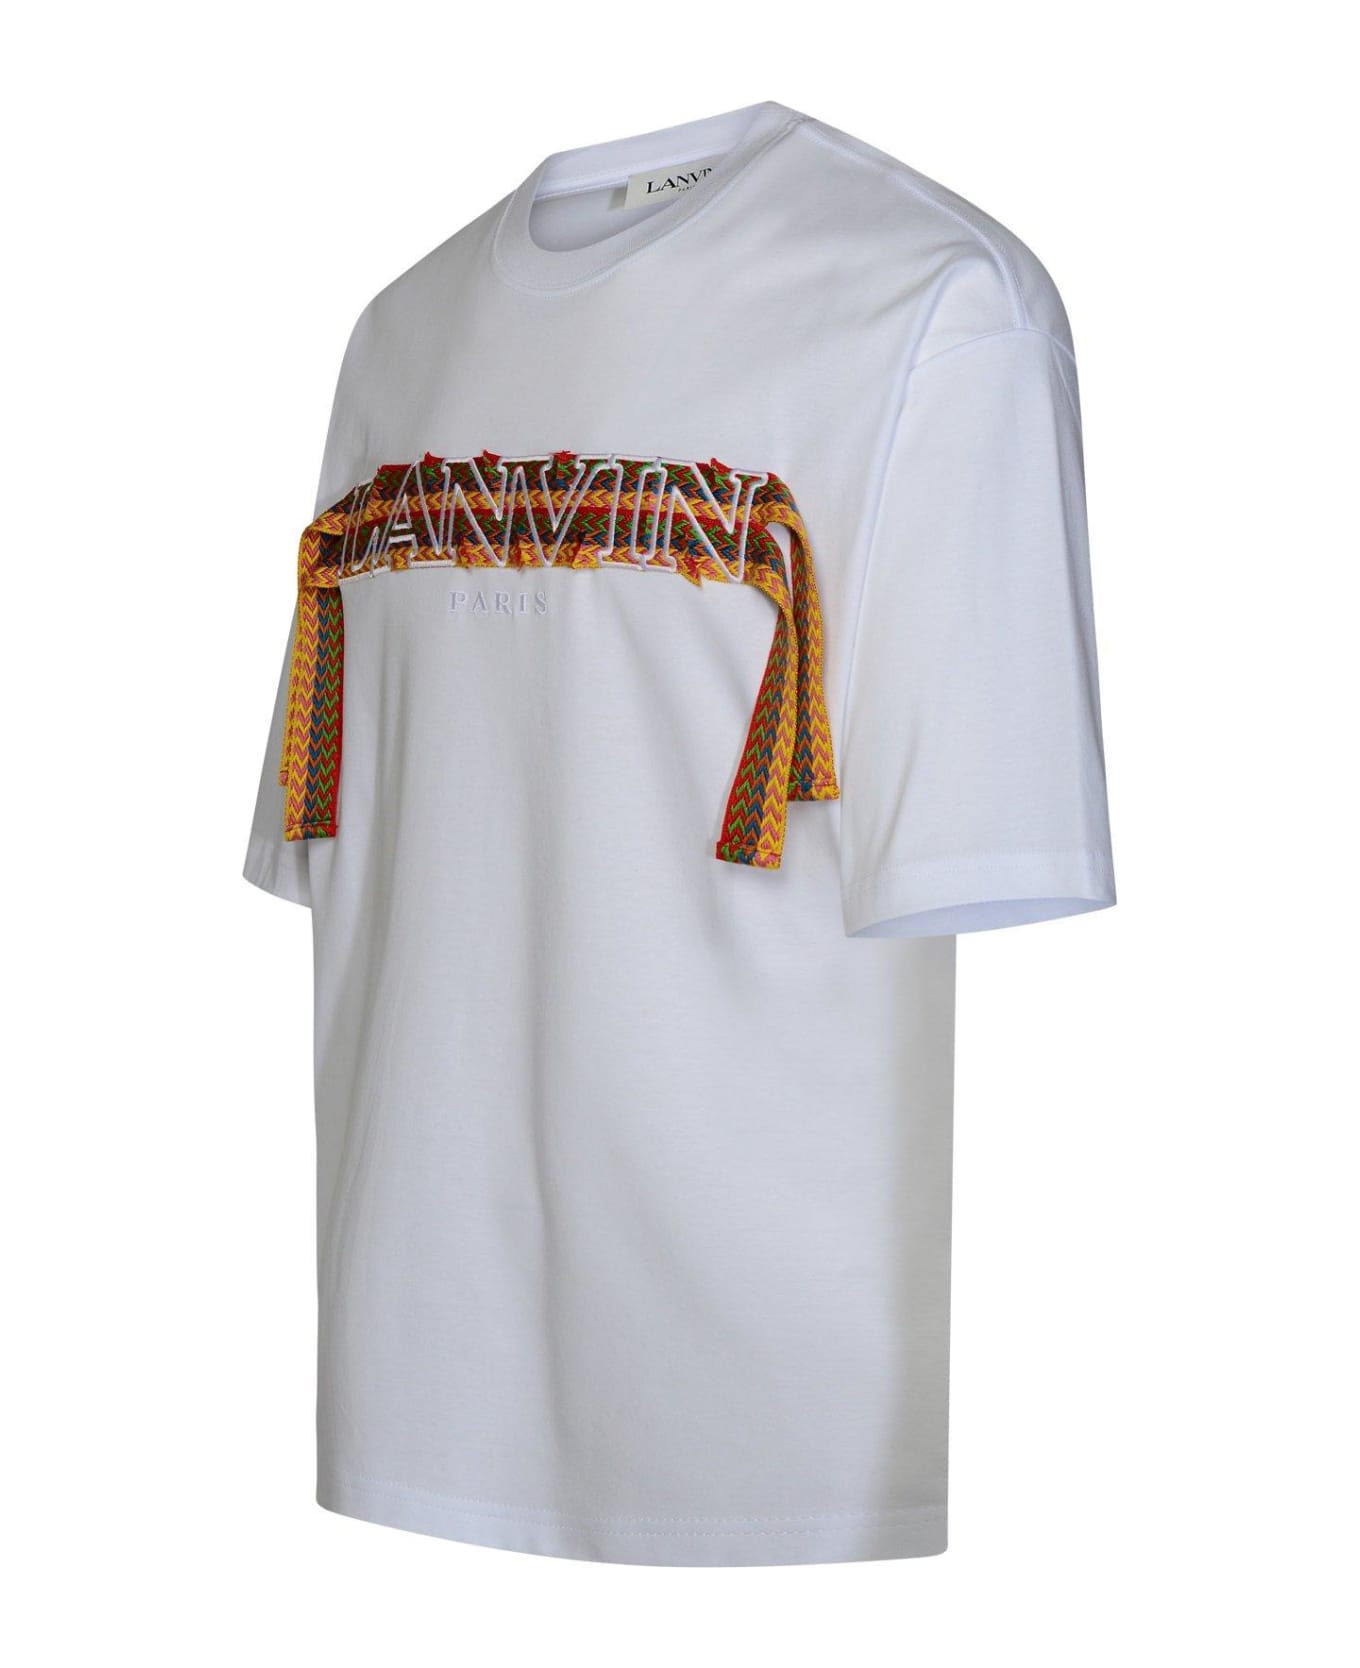 Lanvin Curblace Crewneck T-shirt - WHITE